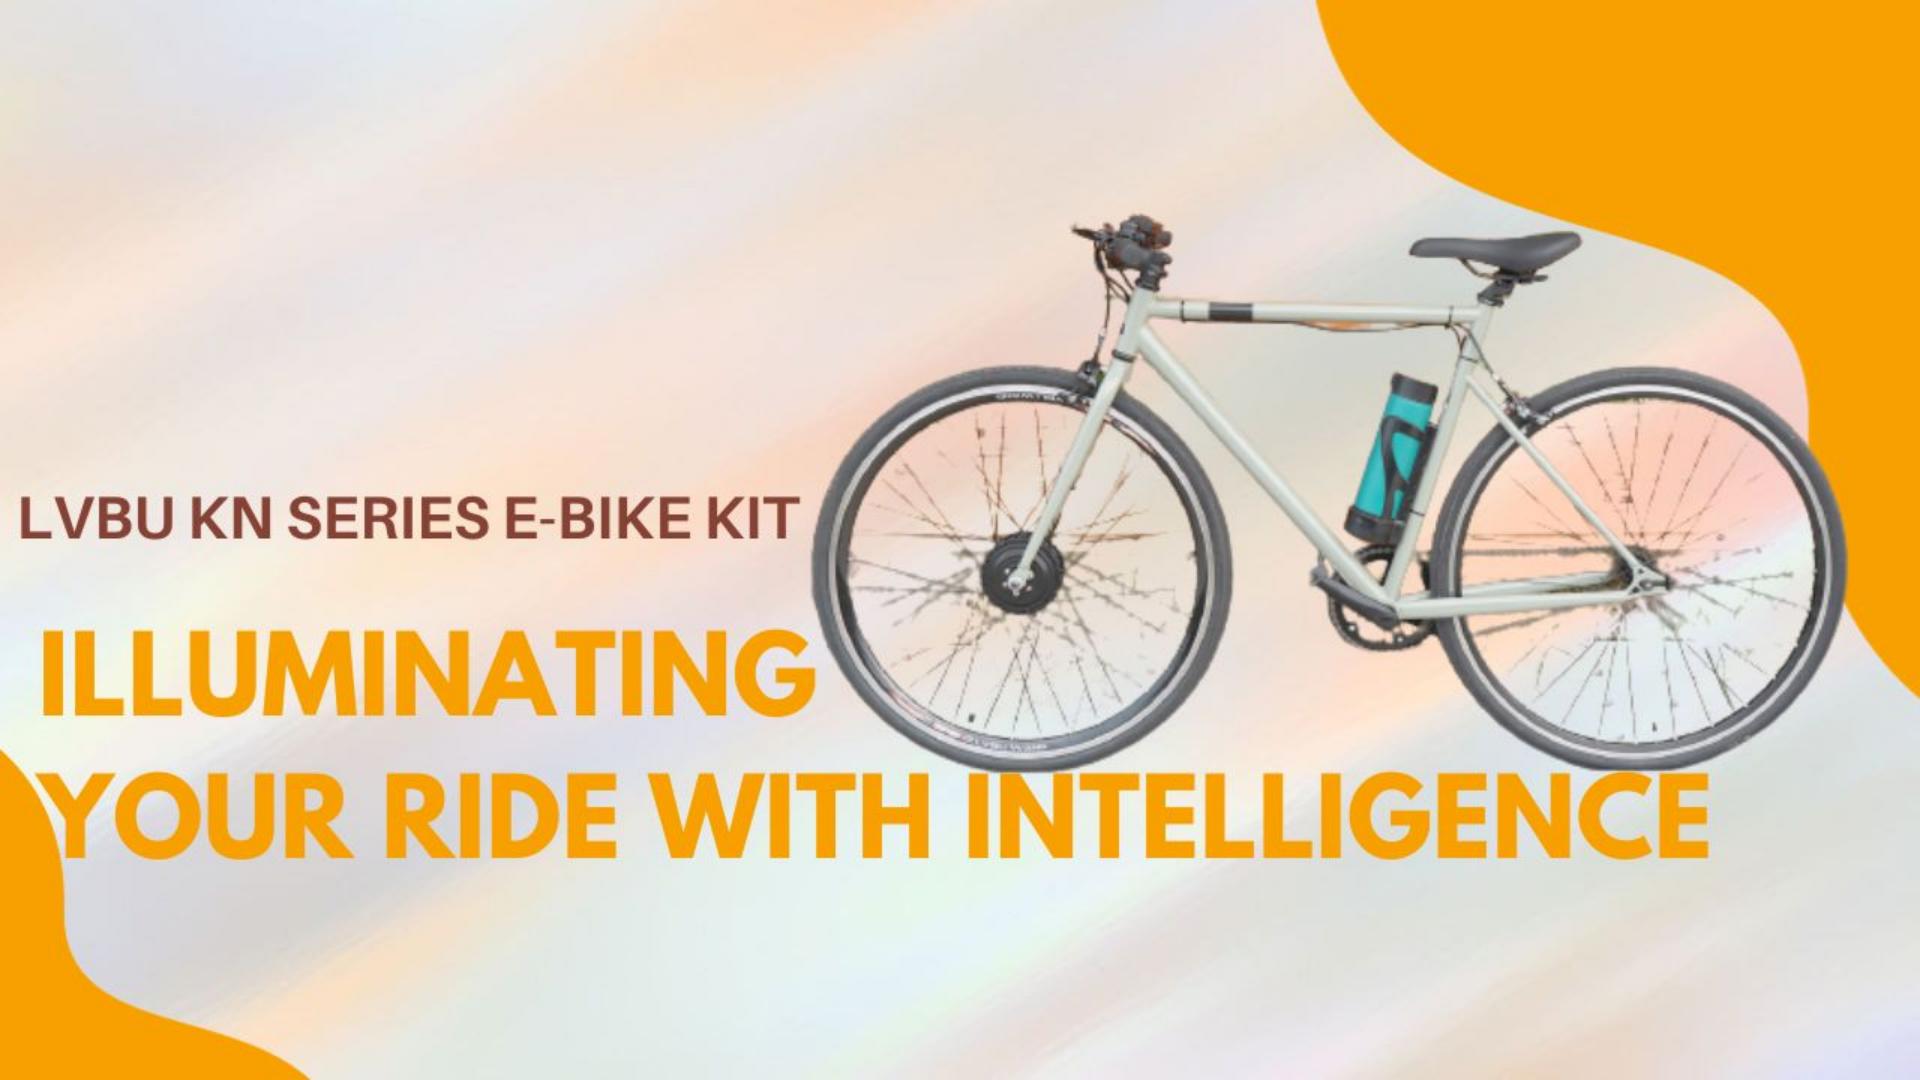 LVBU KN Series E-bike Kit// illuminating your ride with intelligence